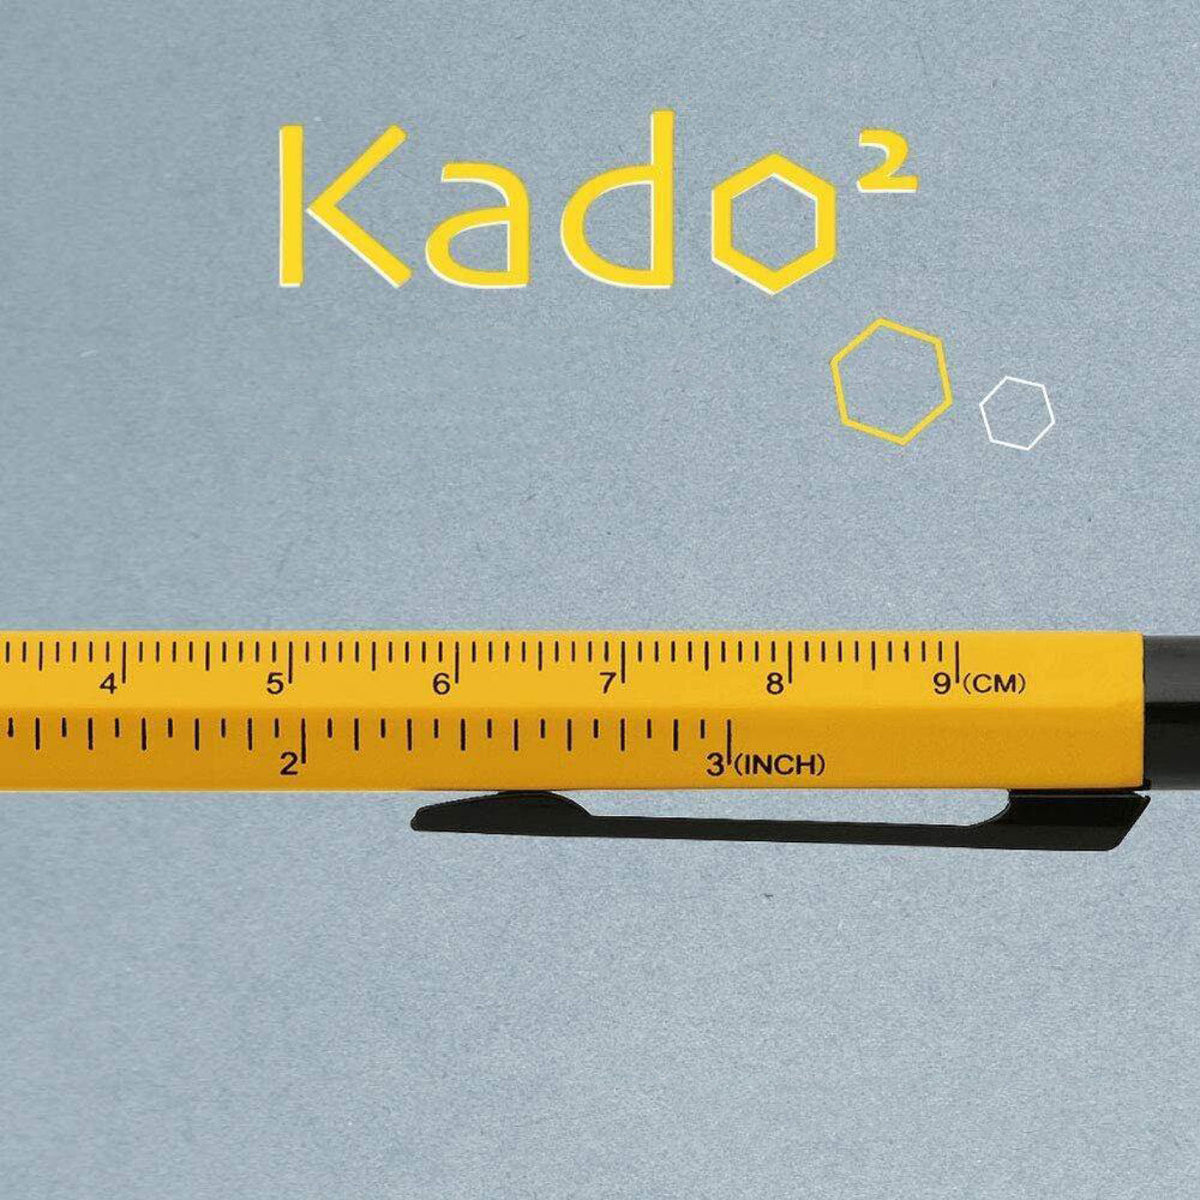 Zebra - Ballpoint Pen - Kado2 - Black